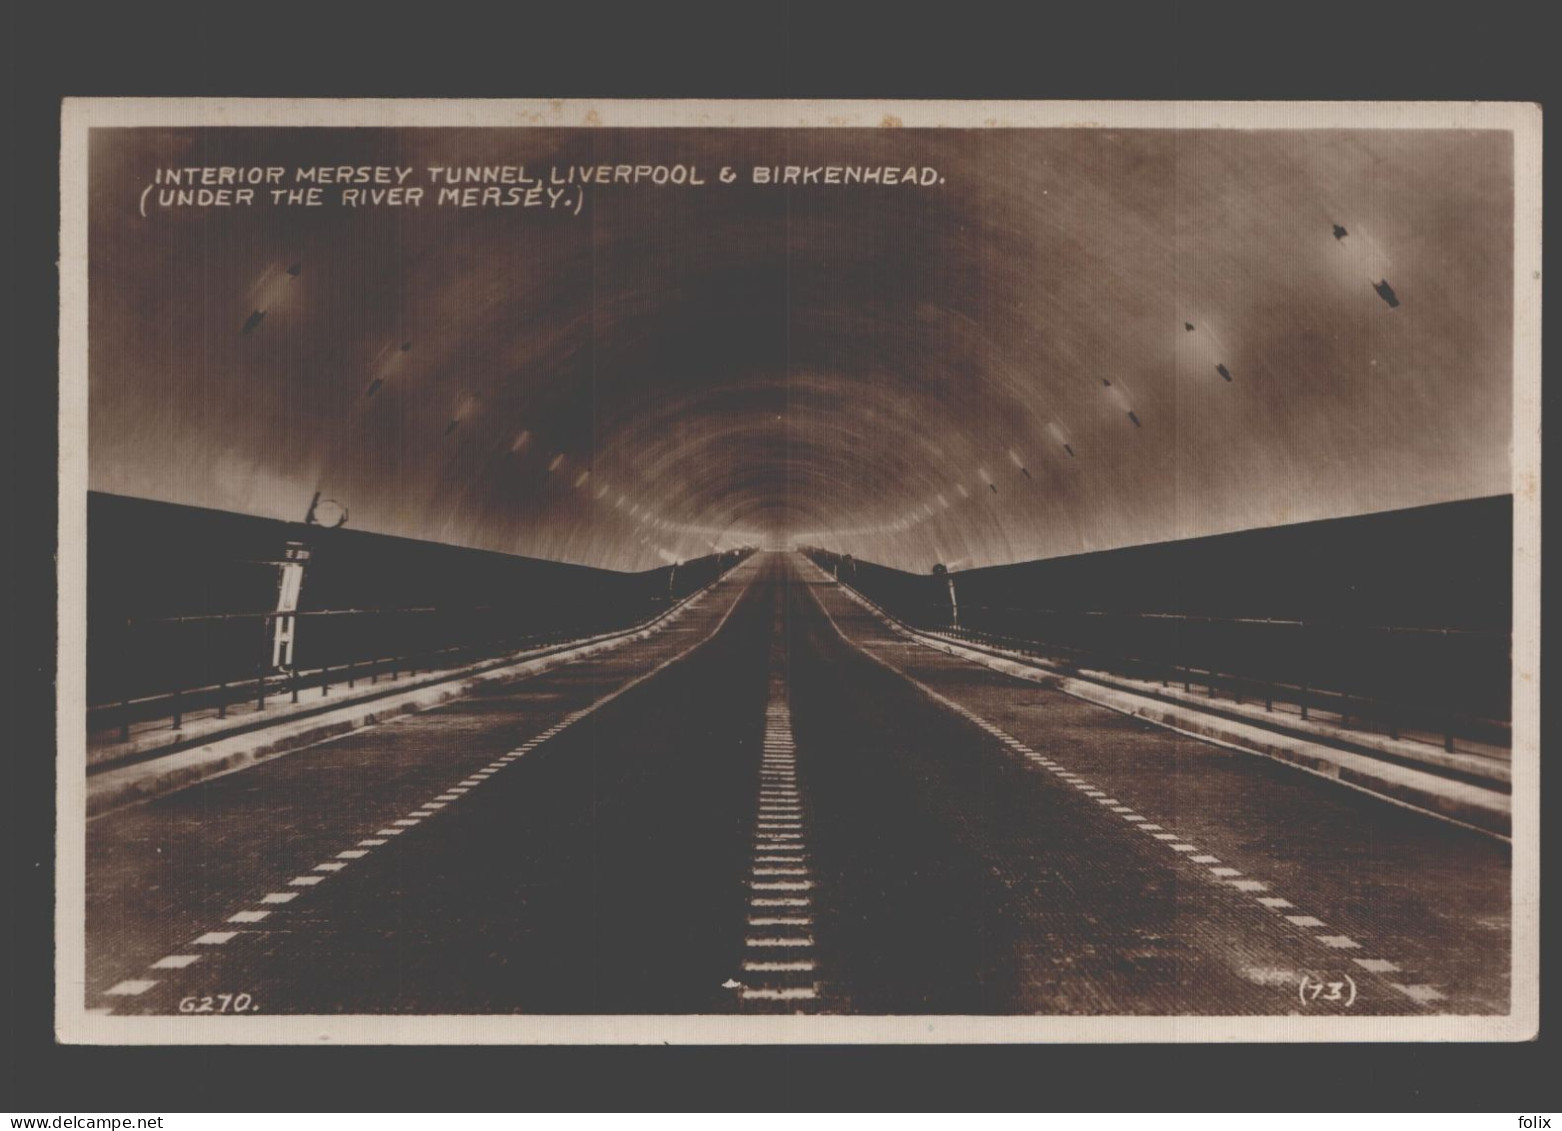 Liverpool - Interior Mersey Tunnel, Liverpool & Birkenhead - Liverpool